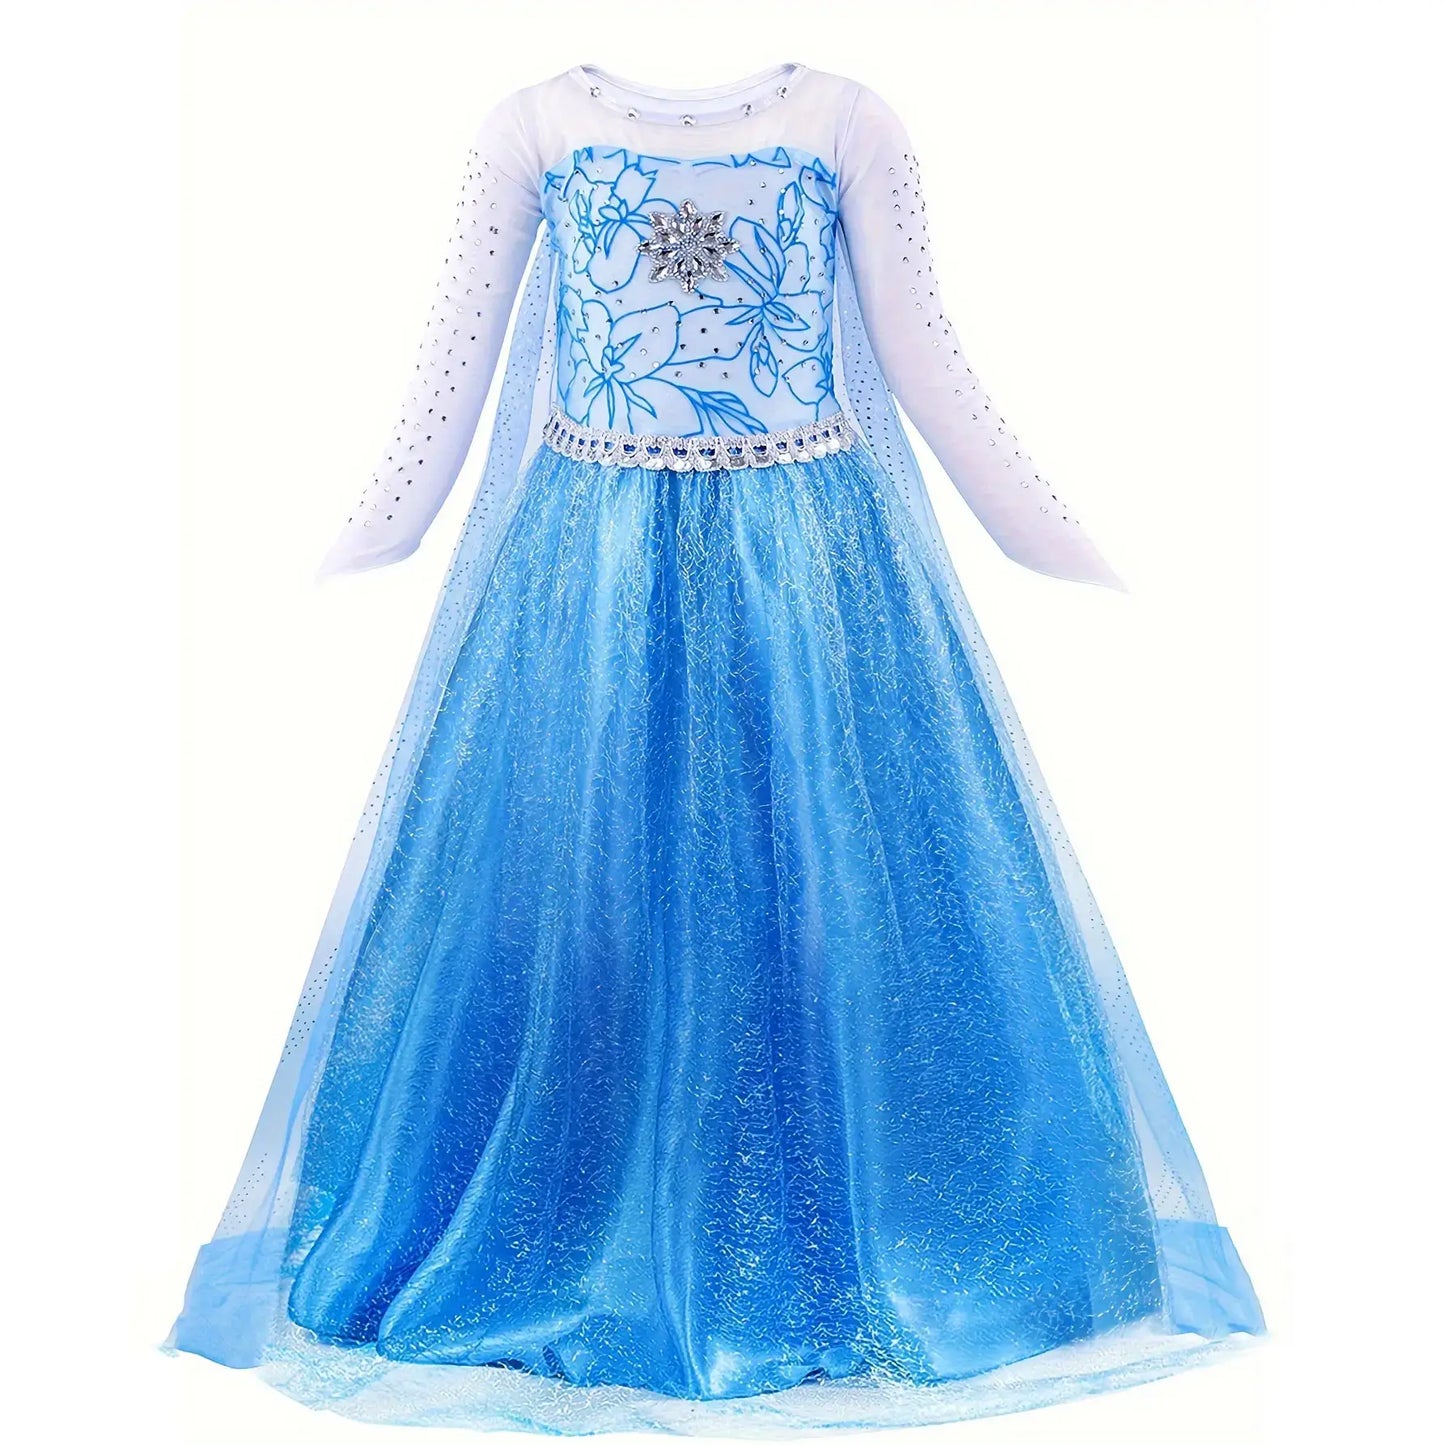 Light Up Princess Elsa Dress for Girls Ice and Snow Princess Dress Halloween Christmas Dress Up